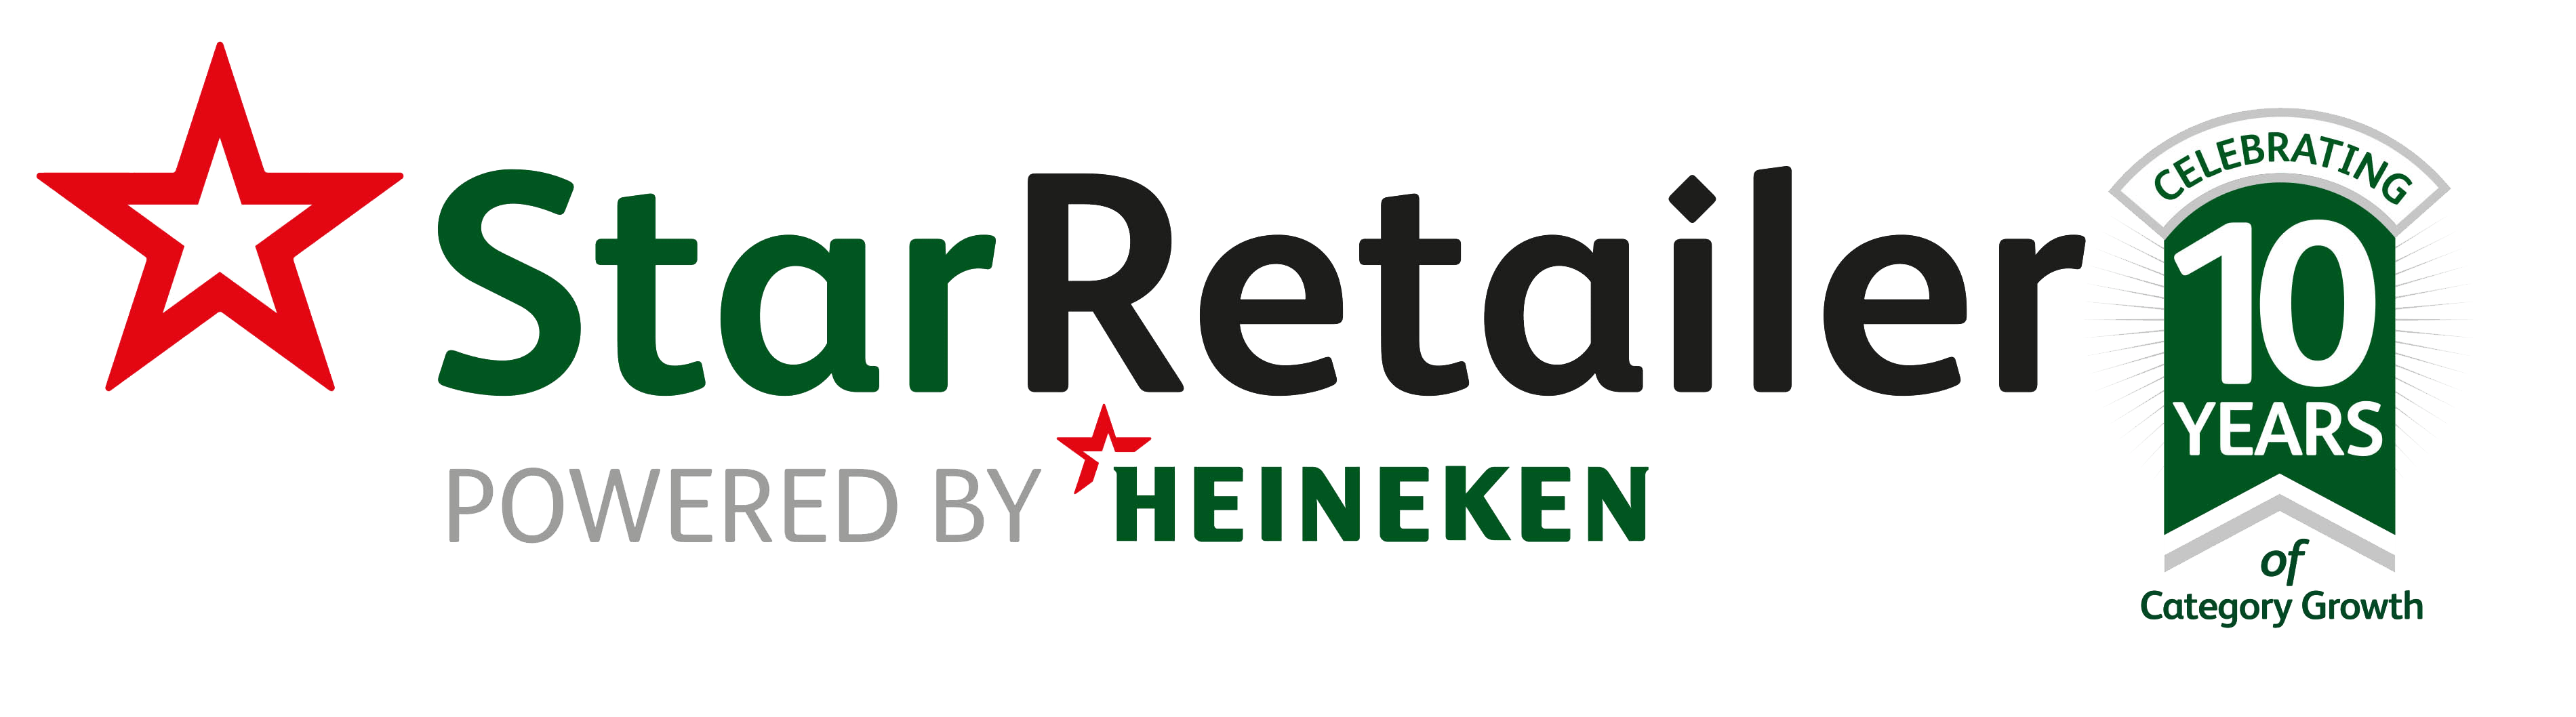 Star Retailer 10 Years logo